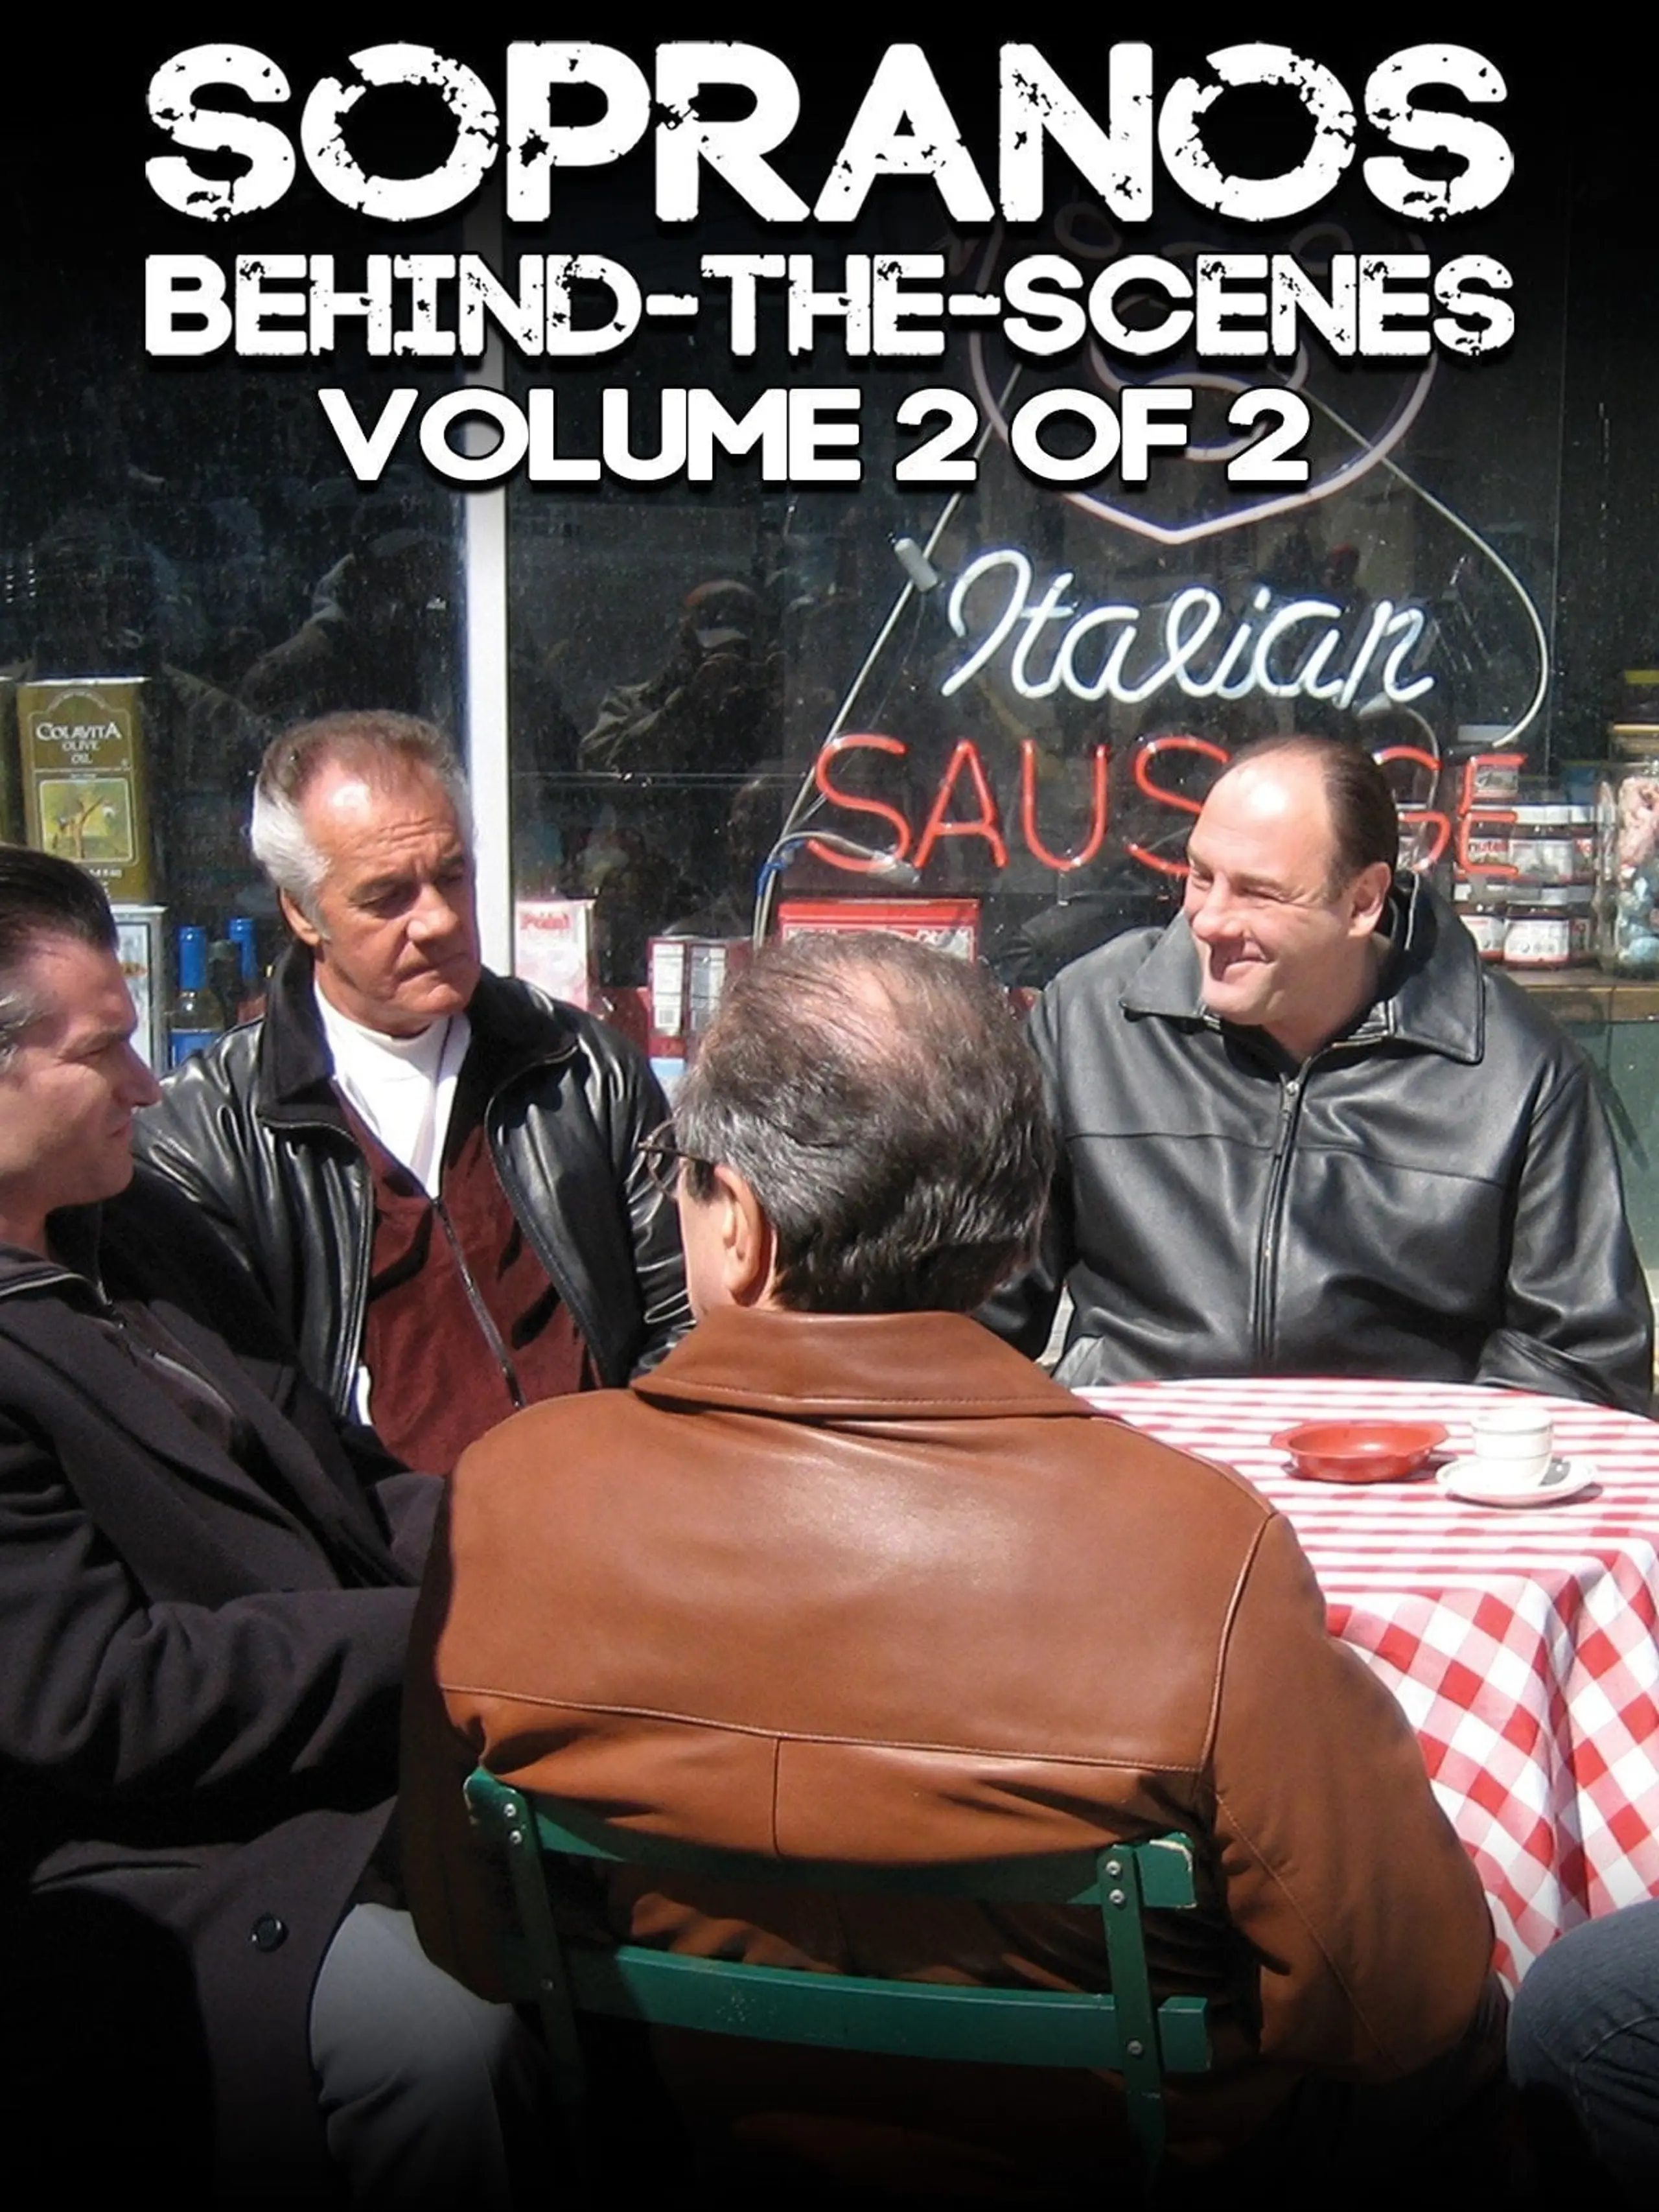 The Sopranos: Behind-The-Scenes